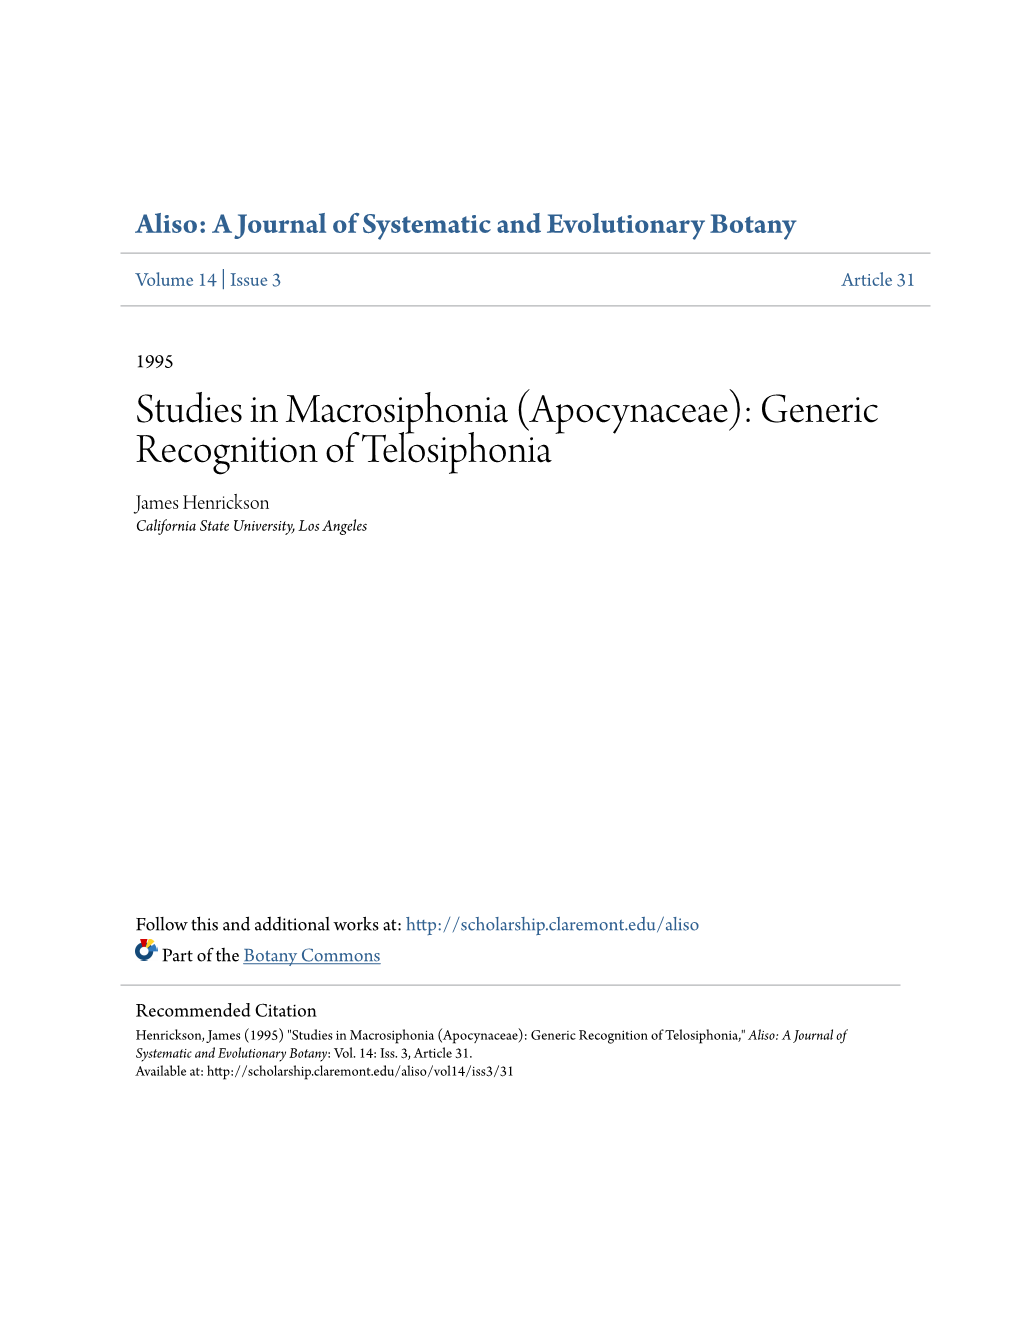 Studies in Macrosiphonia (Apocynaceae): Generic Recognition of Telosiphonia James Henrickson California State University, Los Angeles